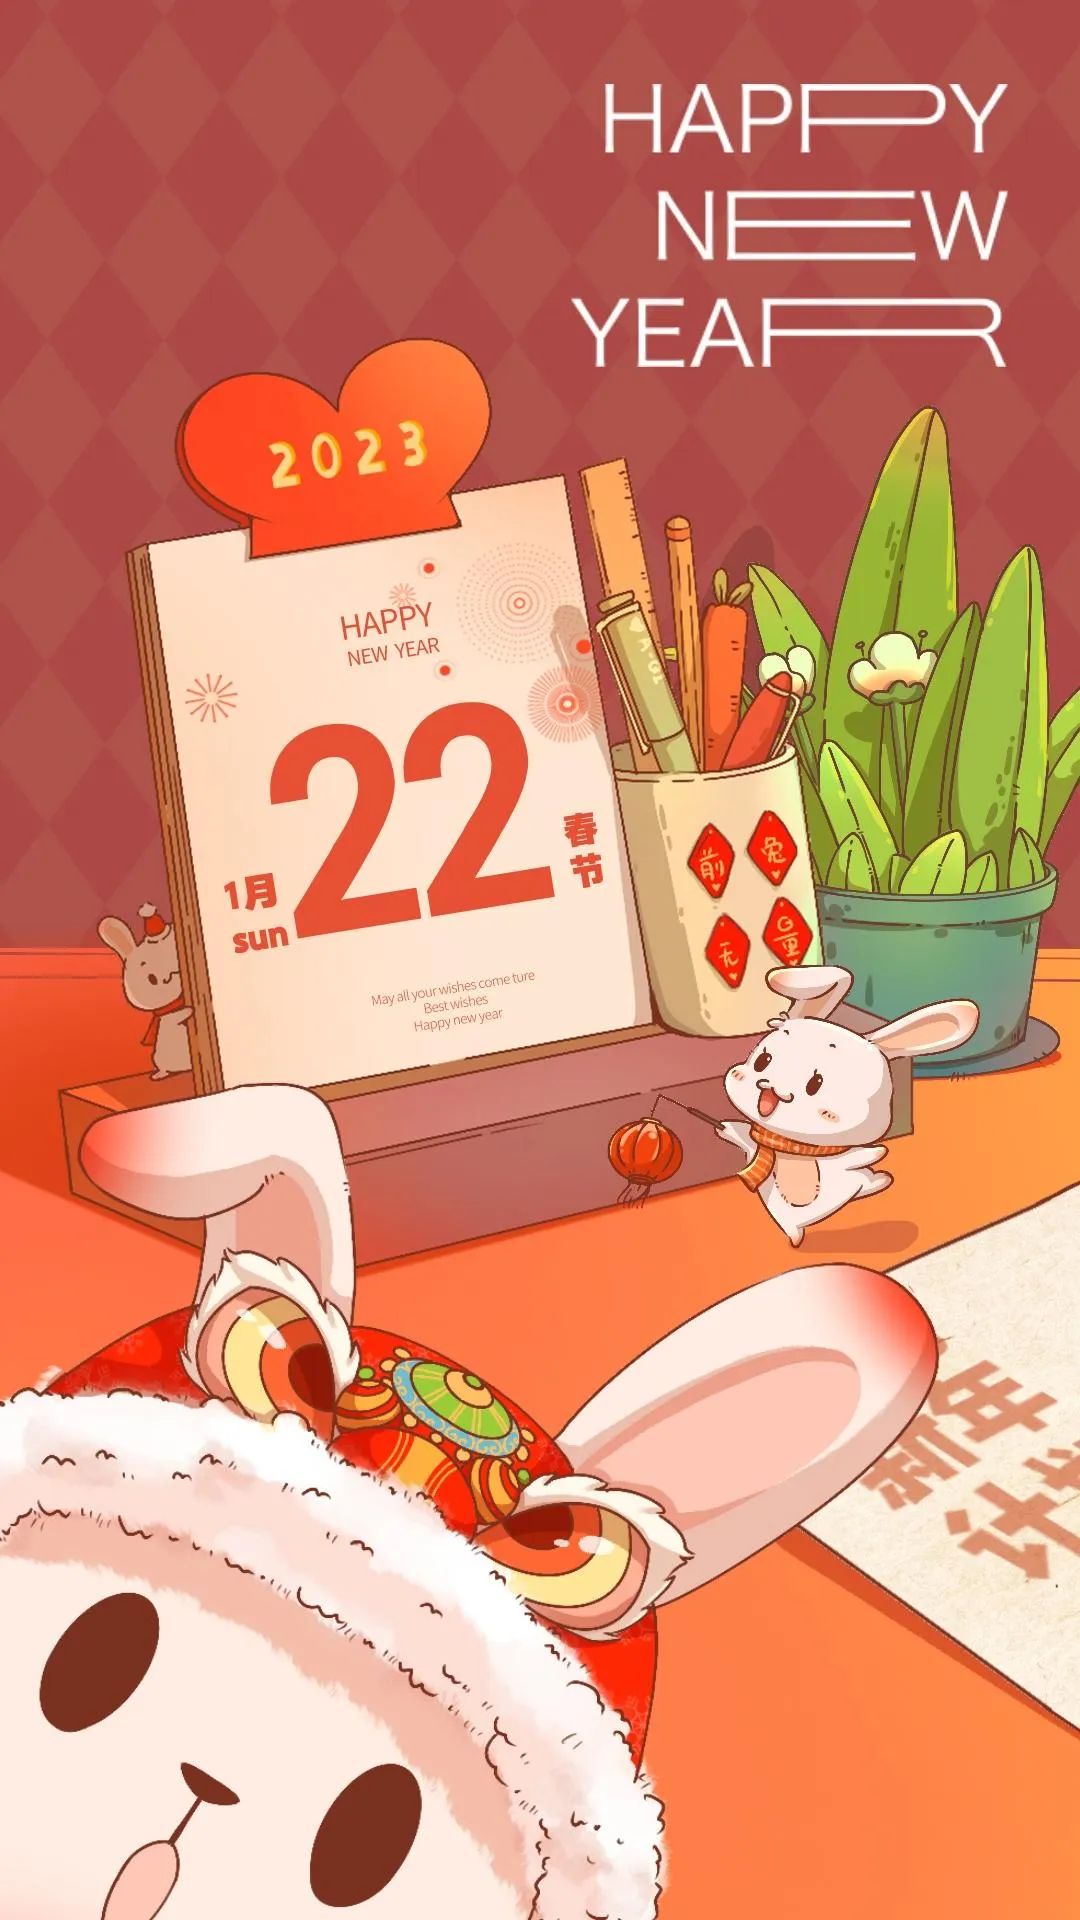 Happy 2023 Spring Festival